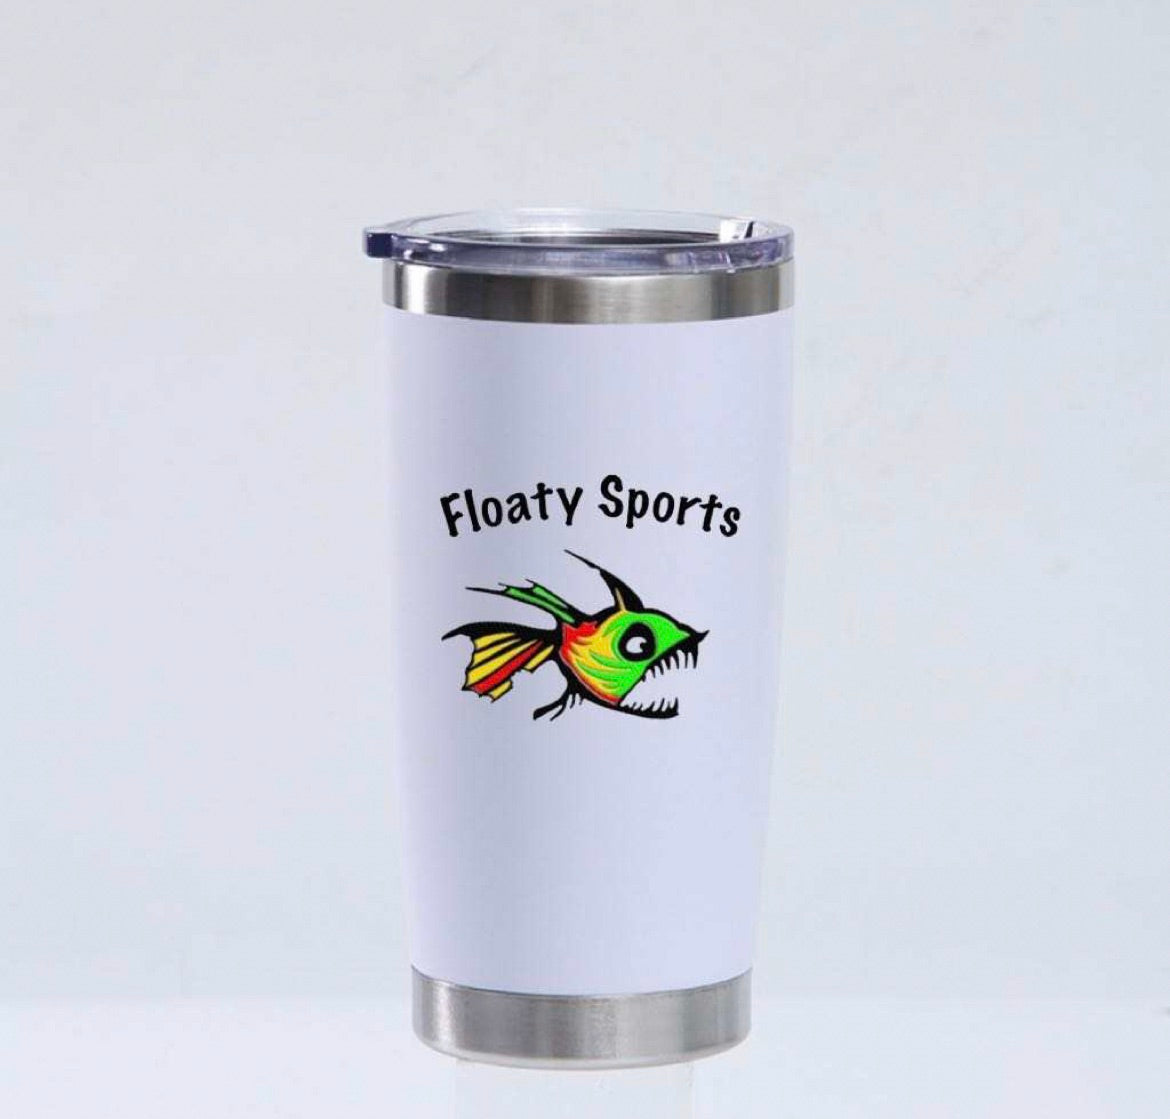 Floaty Sports – FloatySports